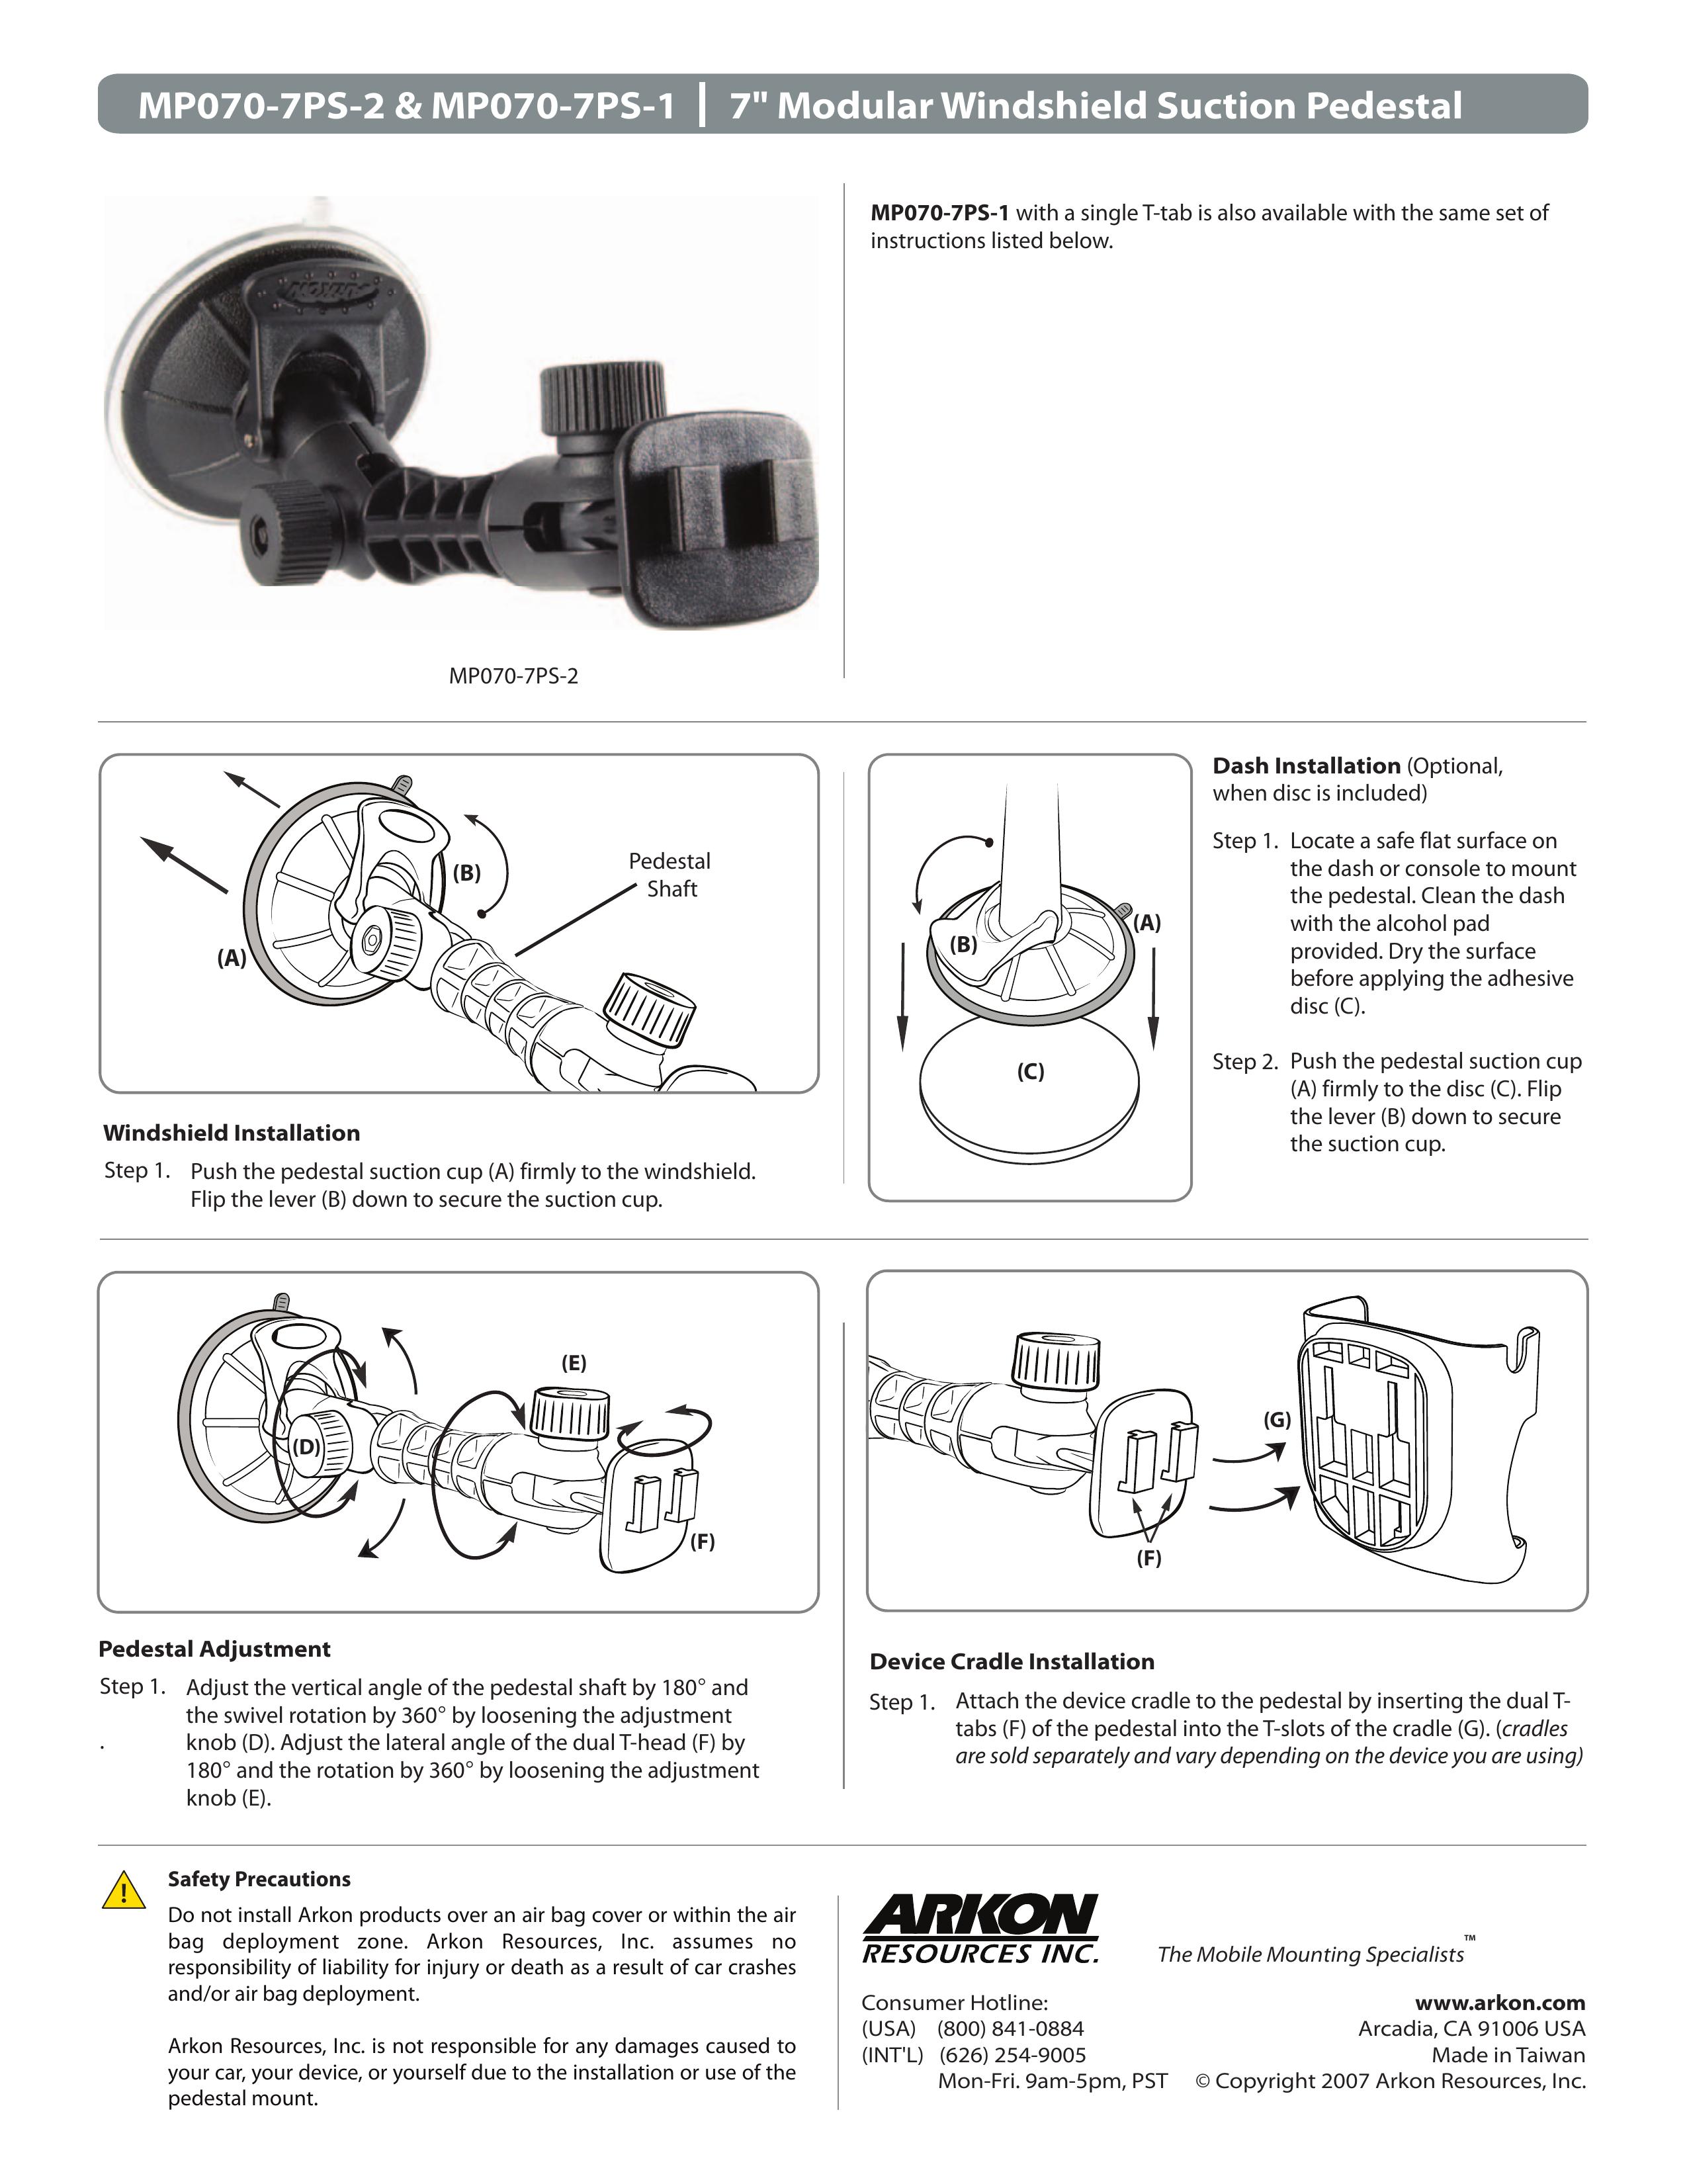 Arkon MP070-7PS-2 Oxygen Equipment User Manual